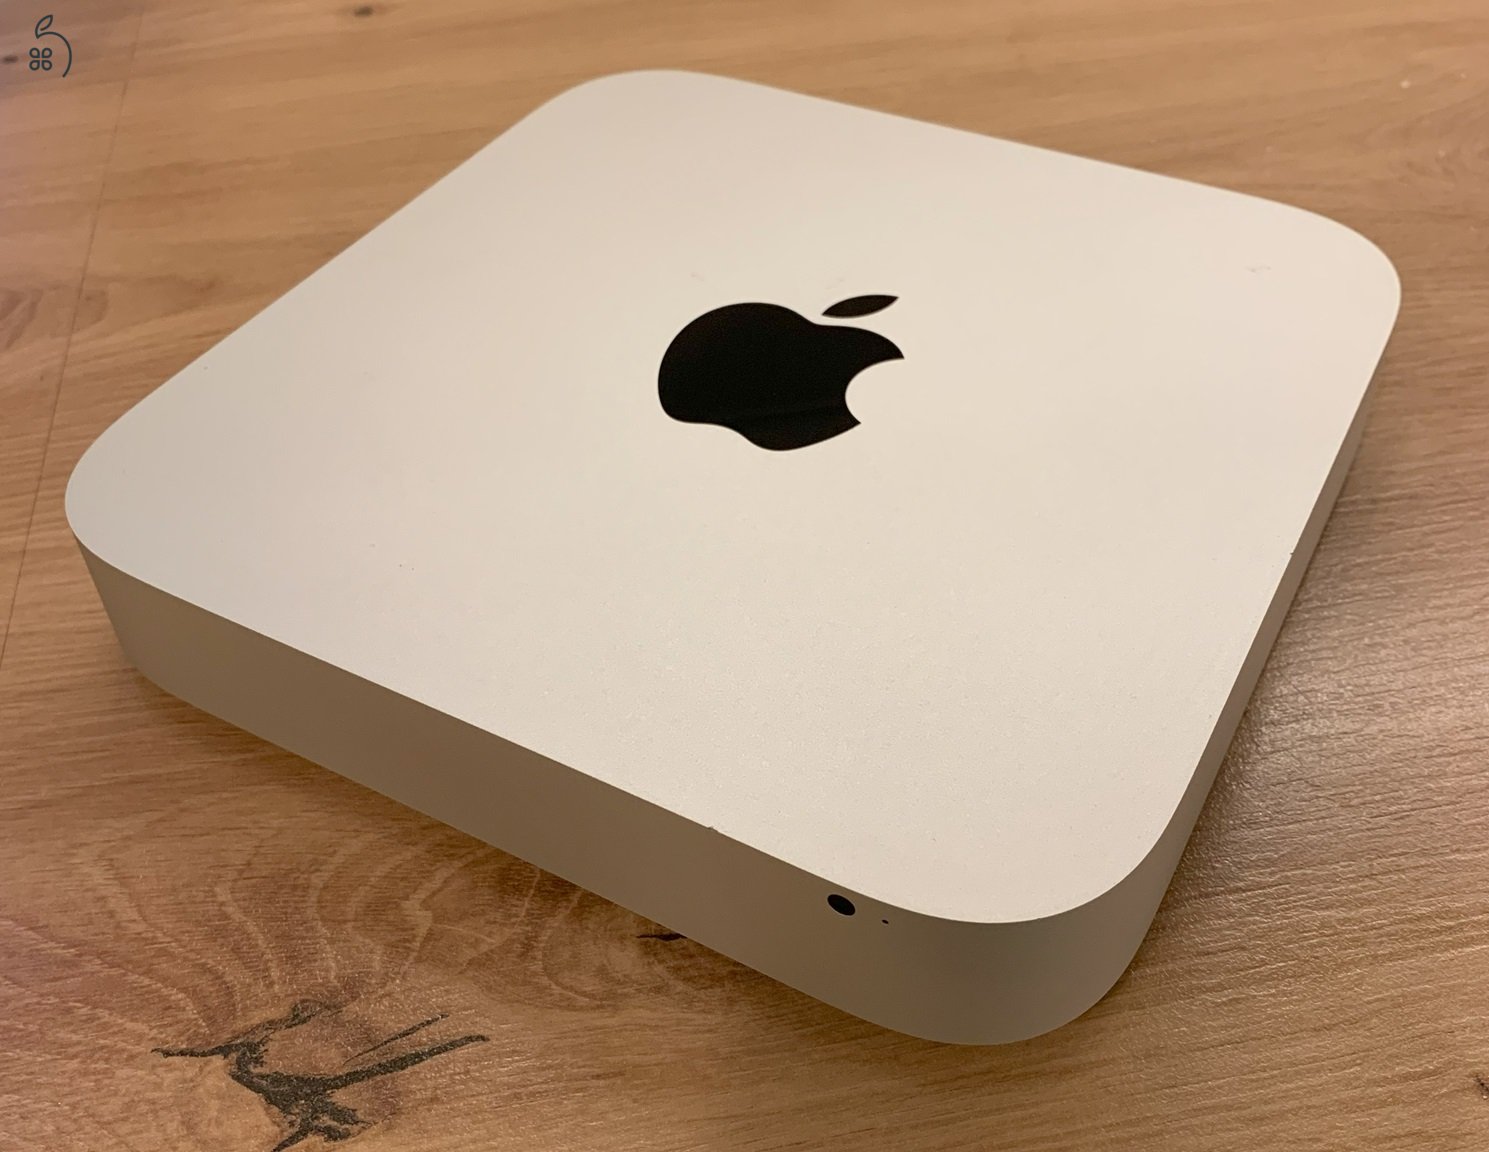 Mac Mini (Late 2012) A1347 - i5/8GB